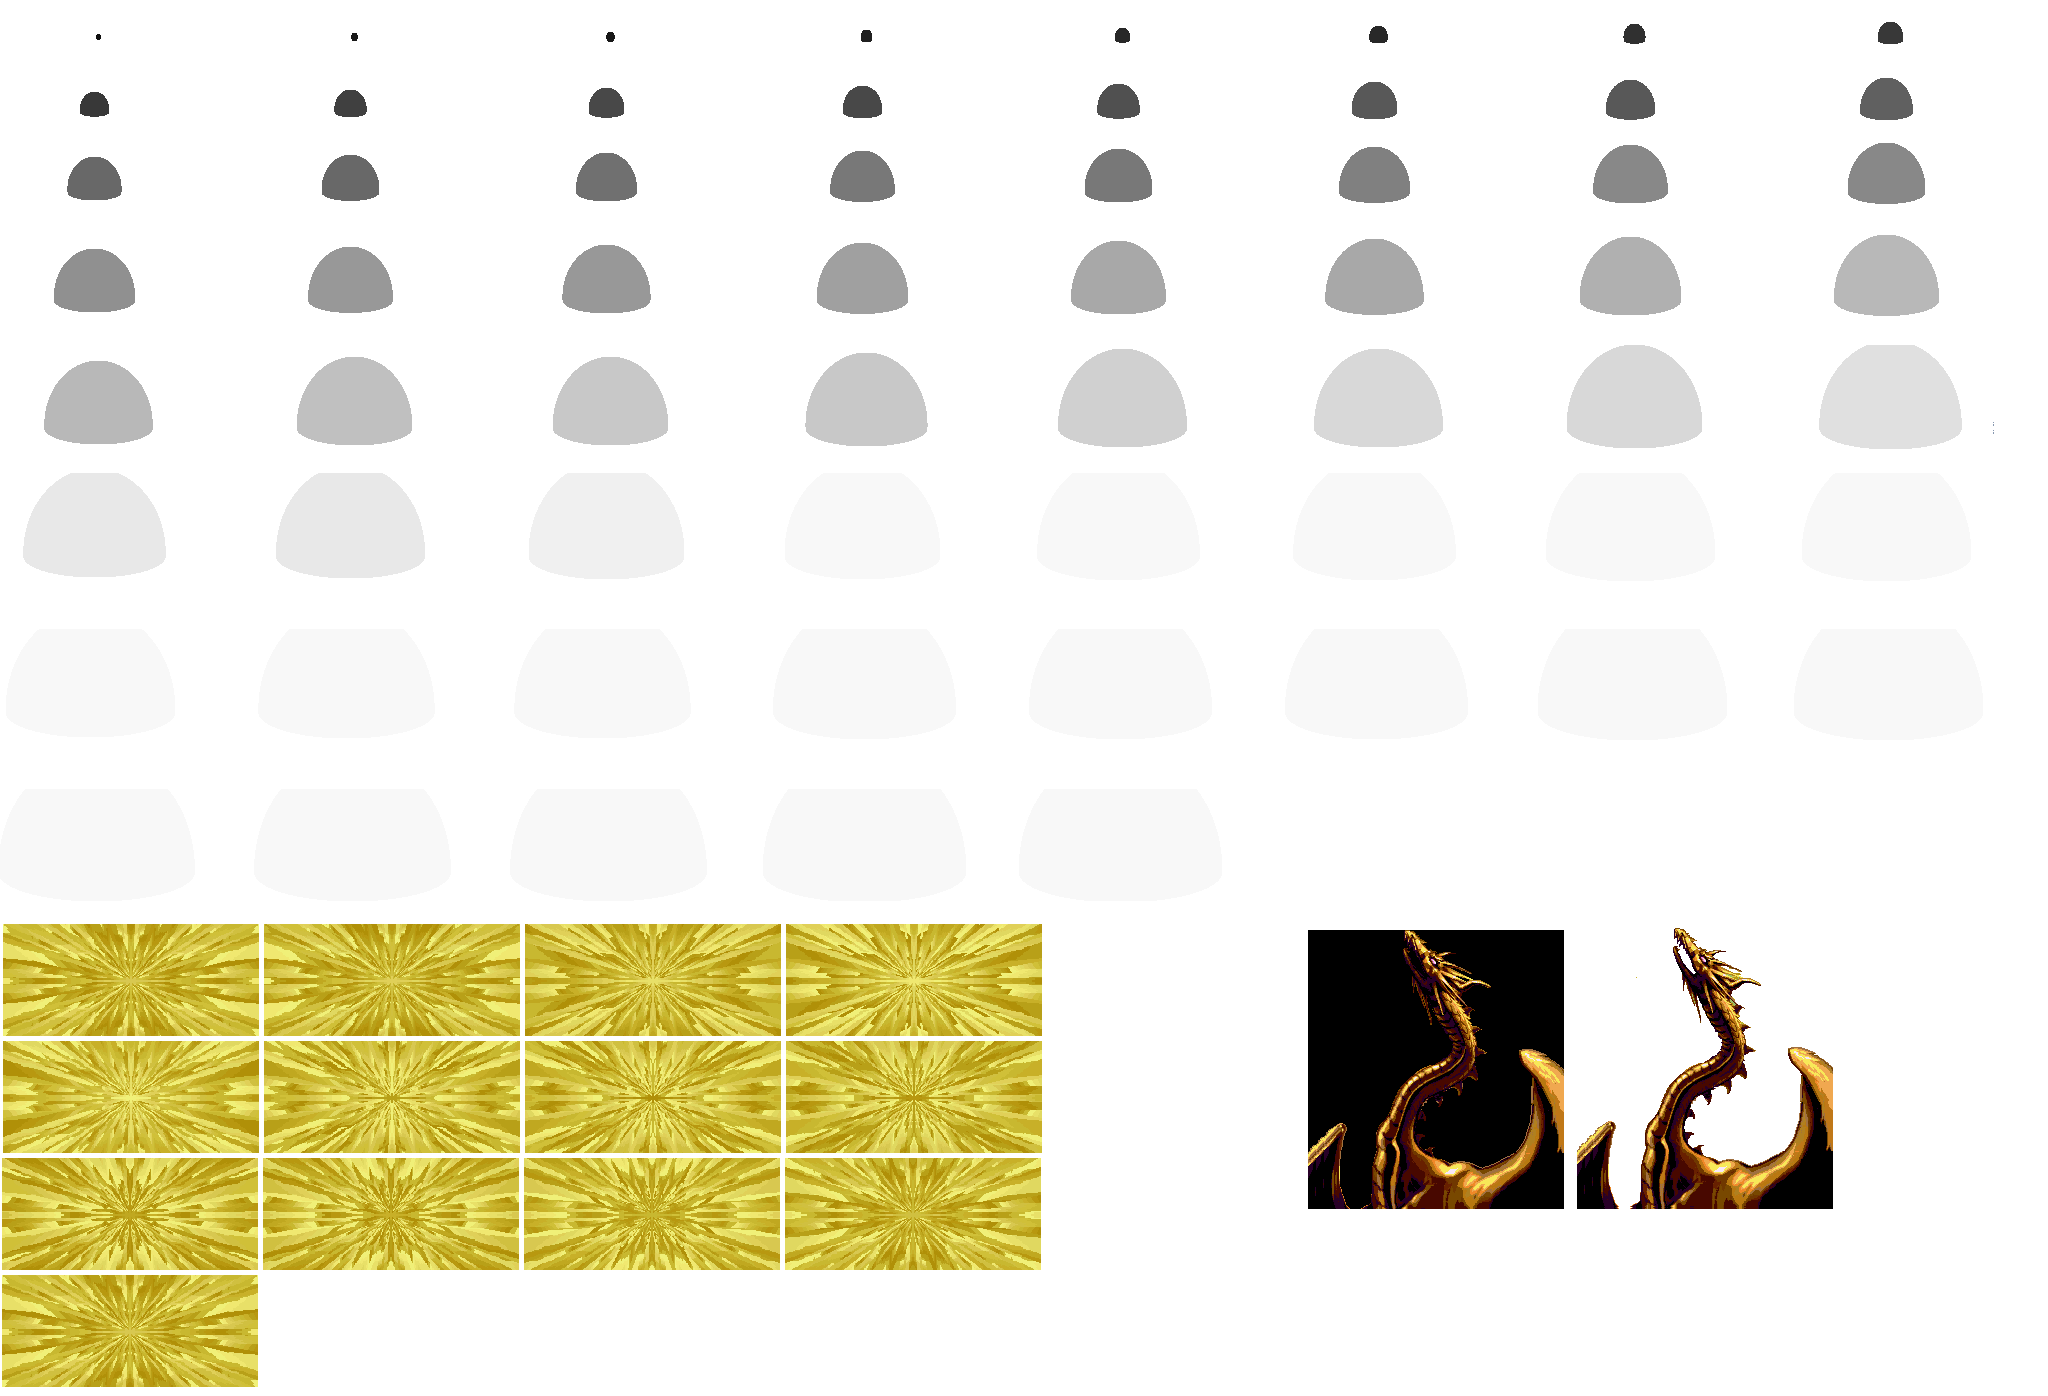 Fire Emblem: Genealogy of the Holy War (JPN) - Naga